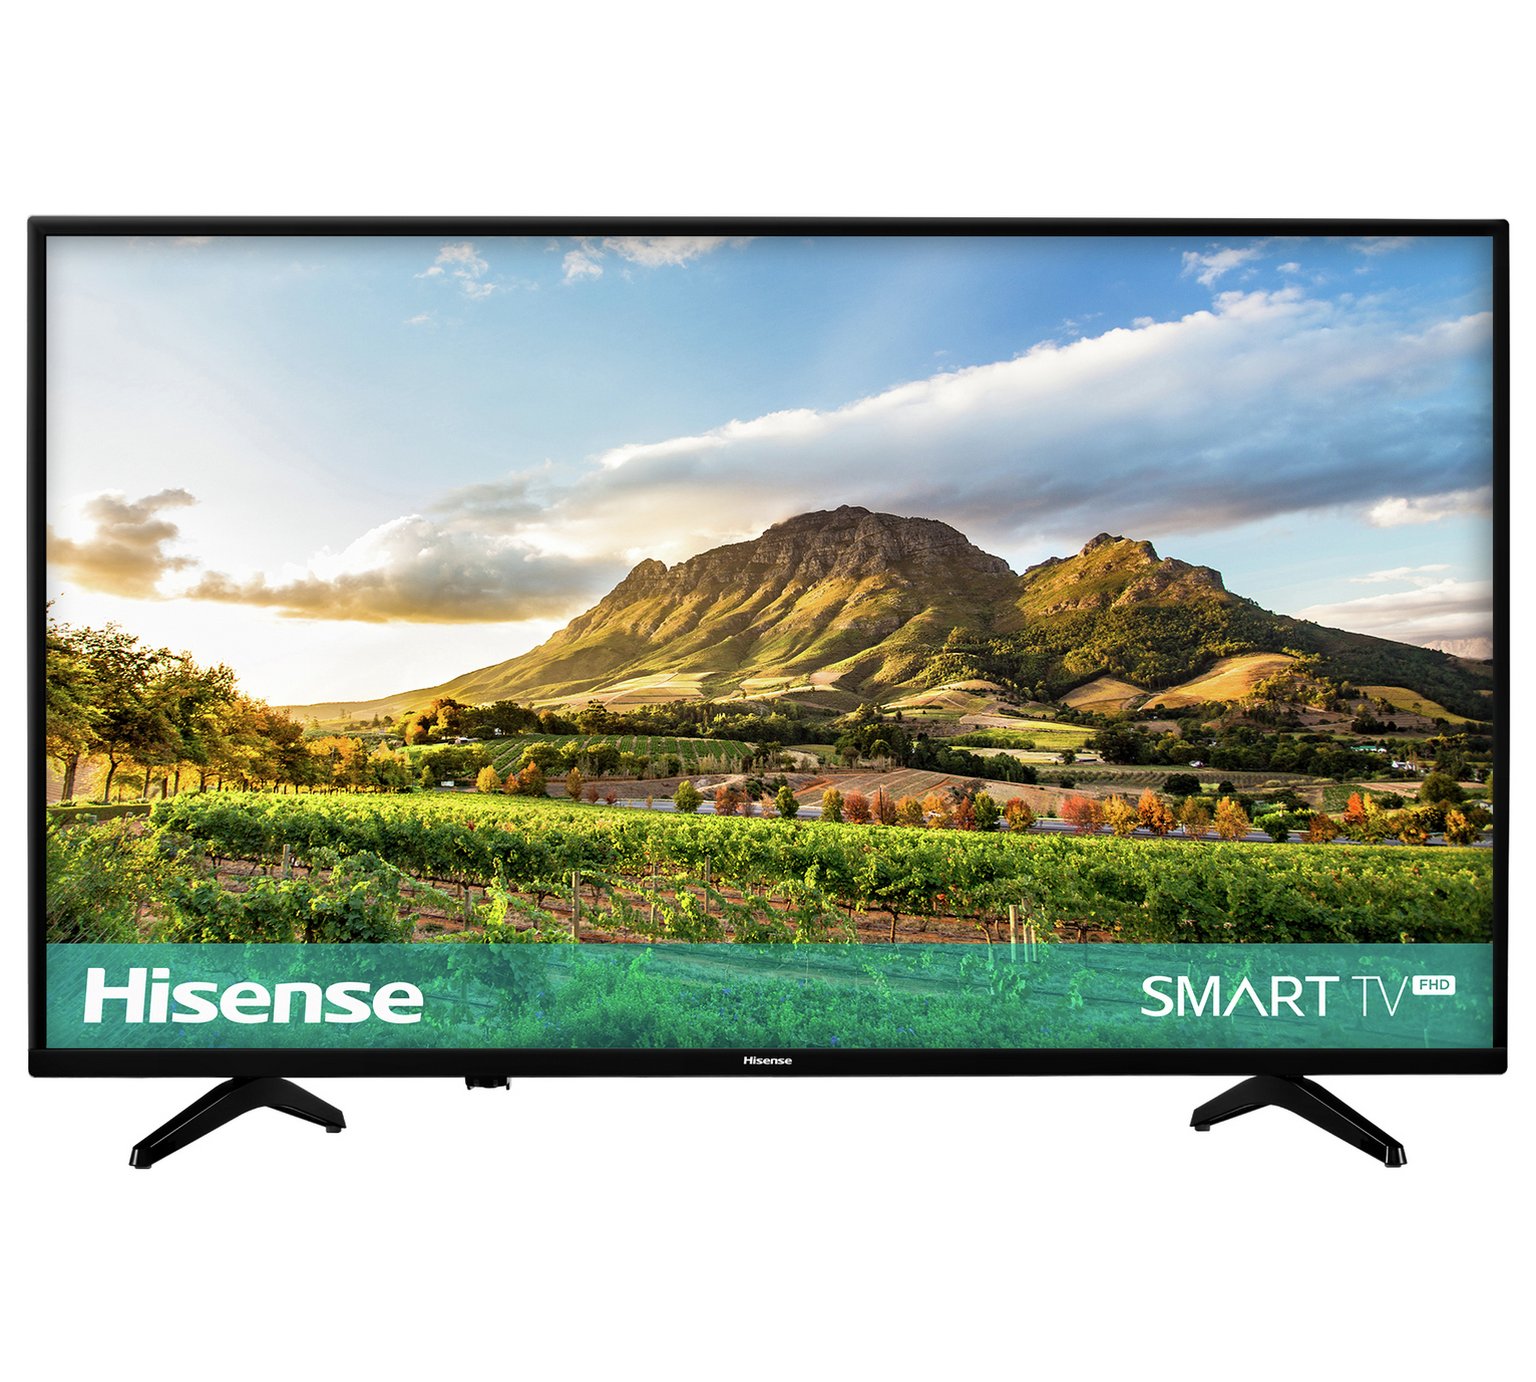 Hisense 32 Inch H32A5600UK Smart HD Ready TV by Hisense 858/8287